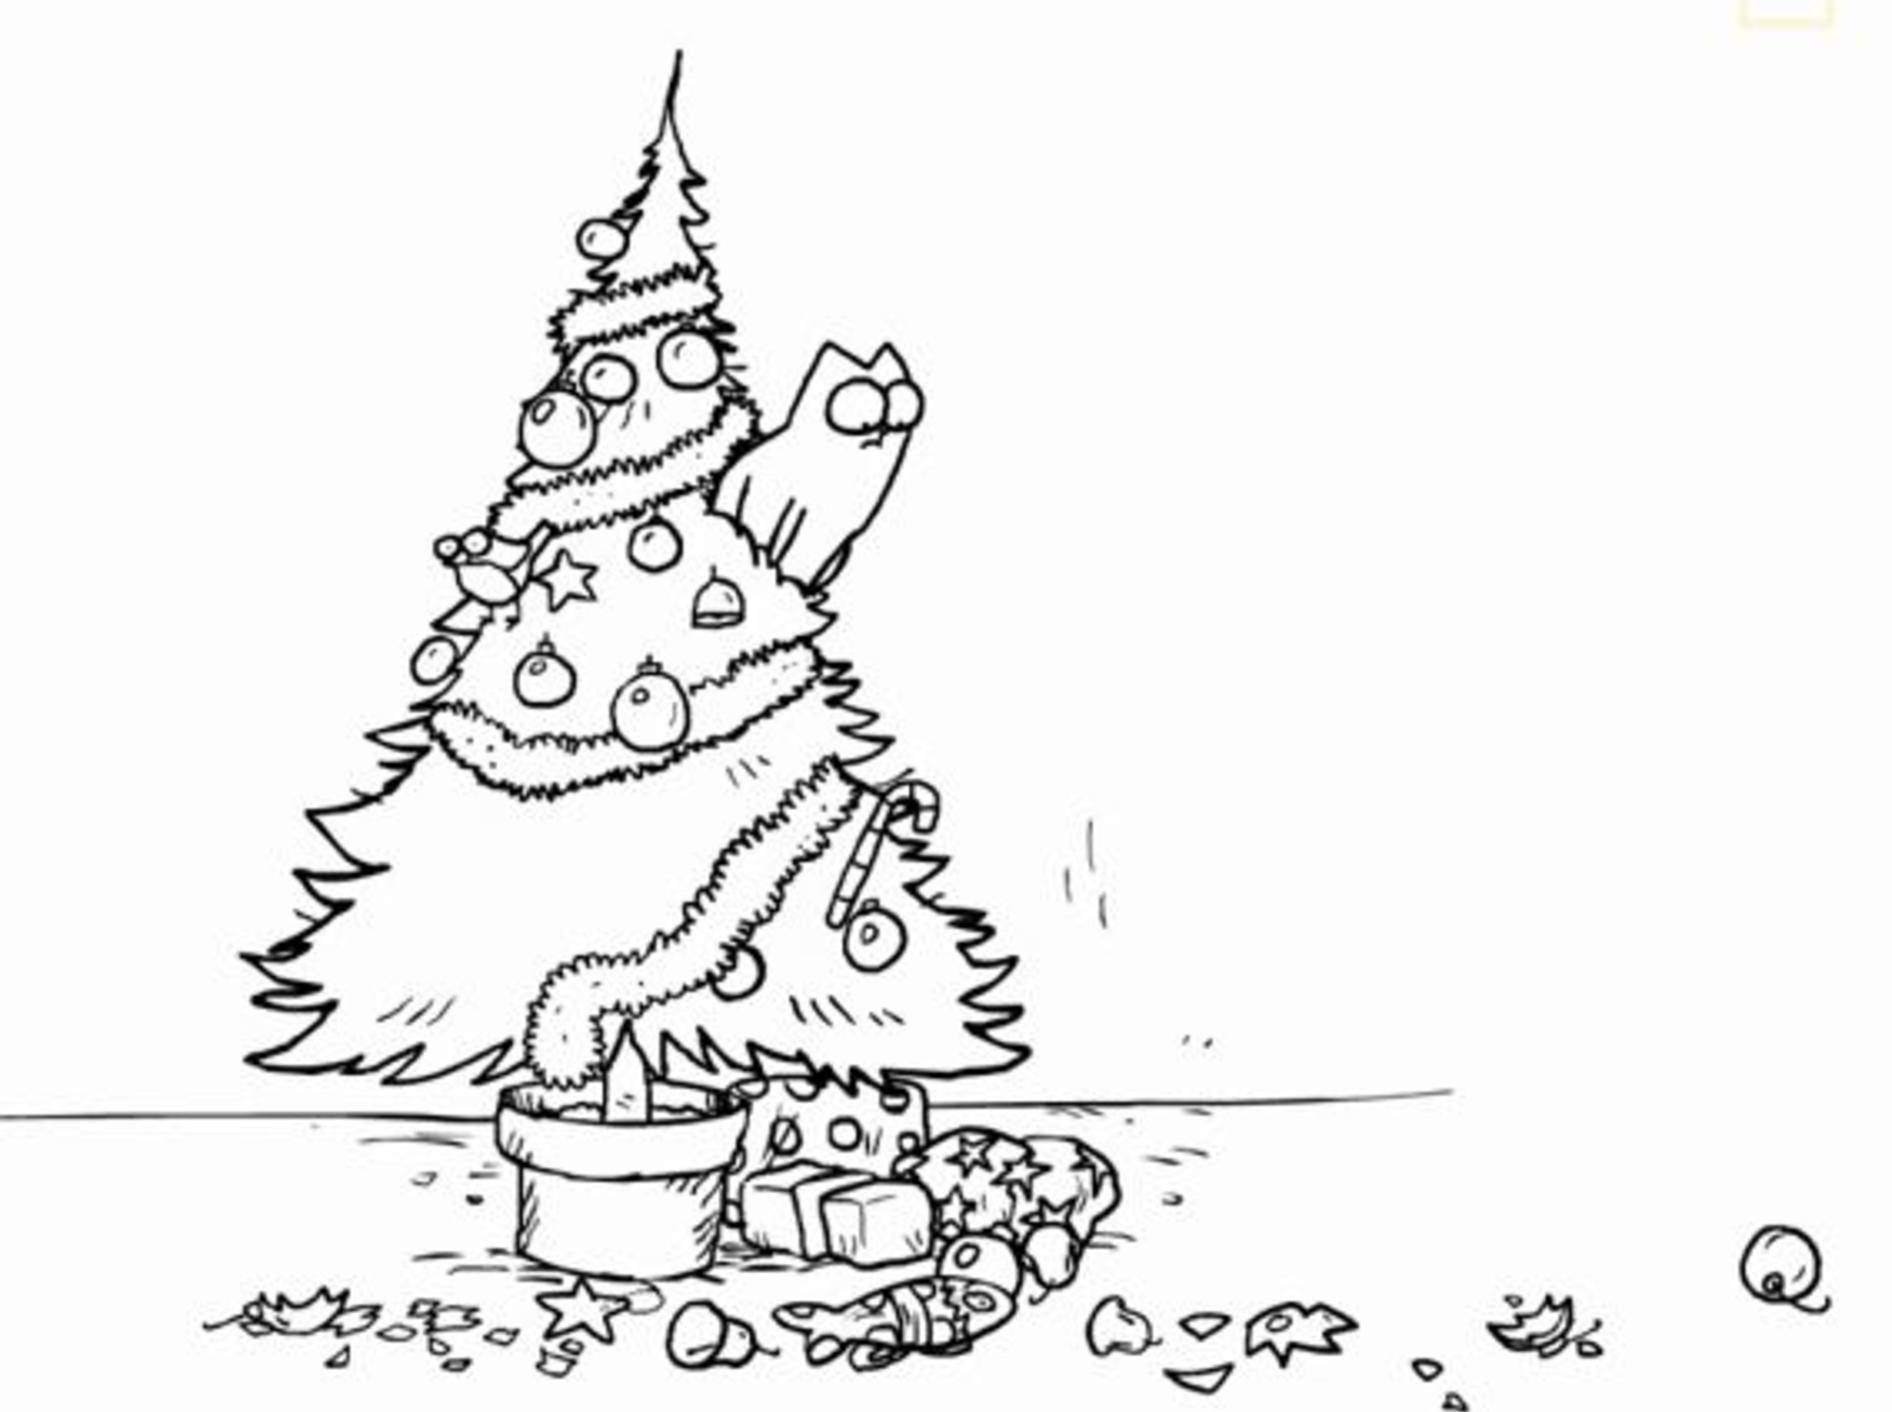 Simon's Cat zerstört Weihnachtsbaum – YouTube / Simon's Cat